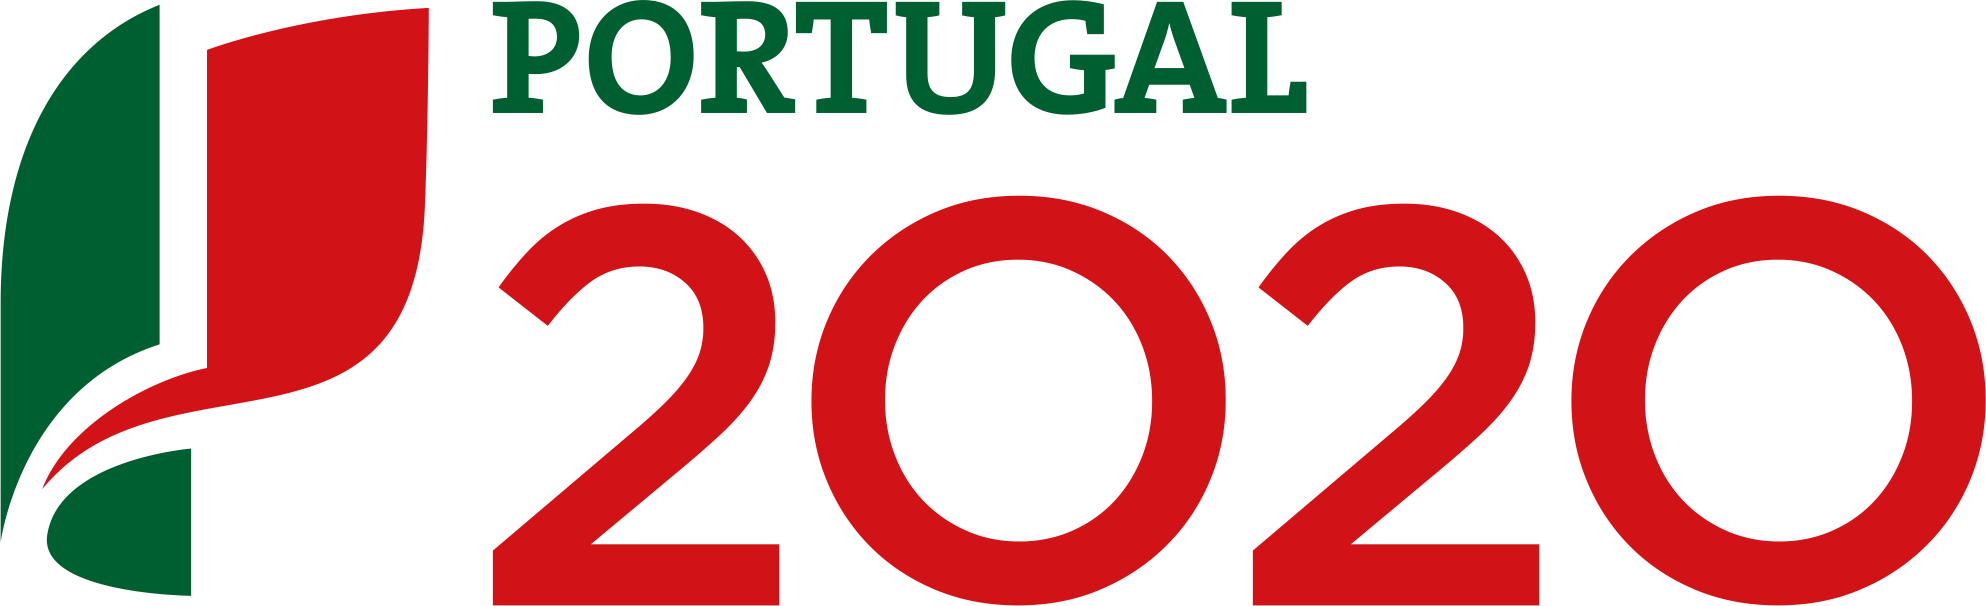 (Português) Portugal 2020